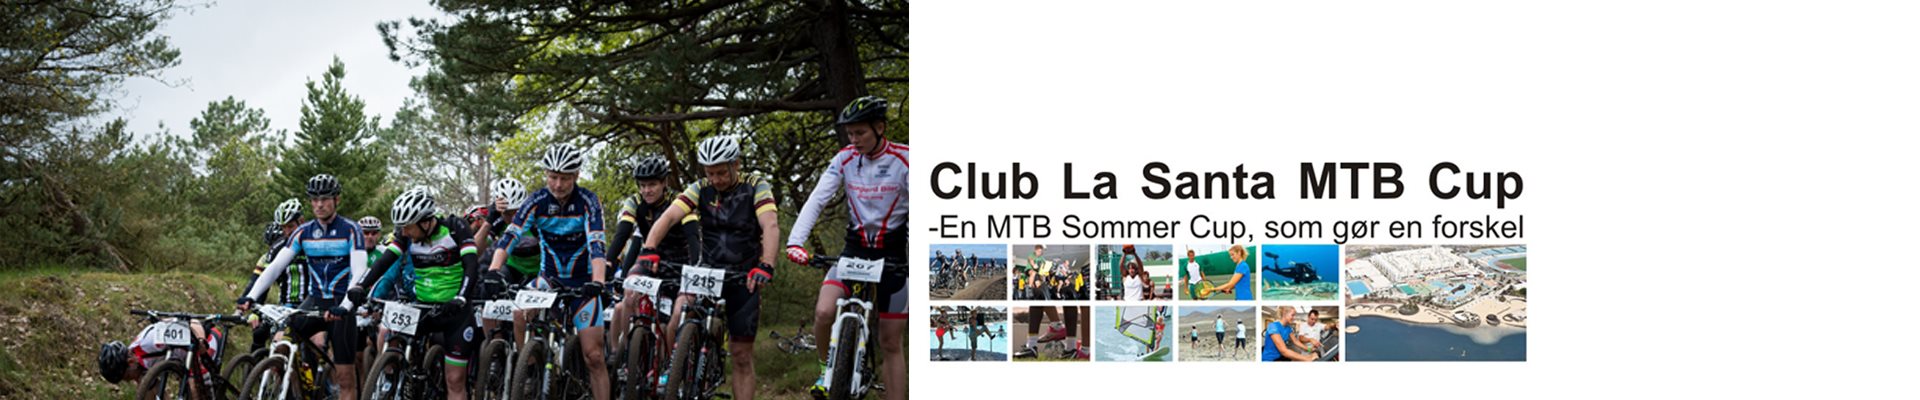 CLUB LA SANTA MTB CUP '21 - #2 Tjæreborg MTB Track